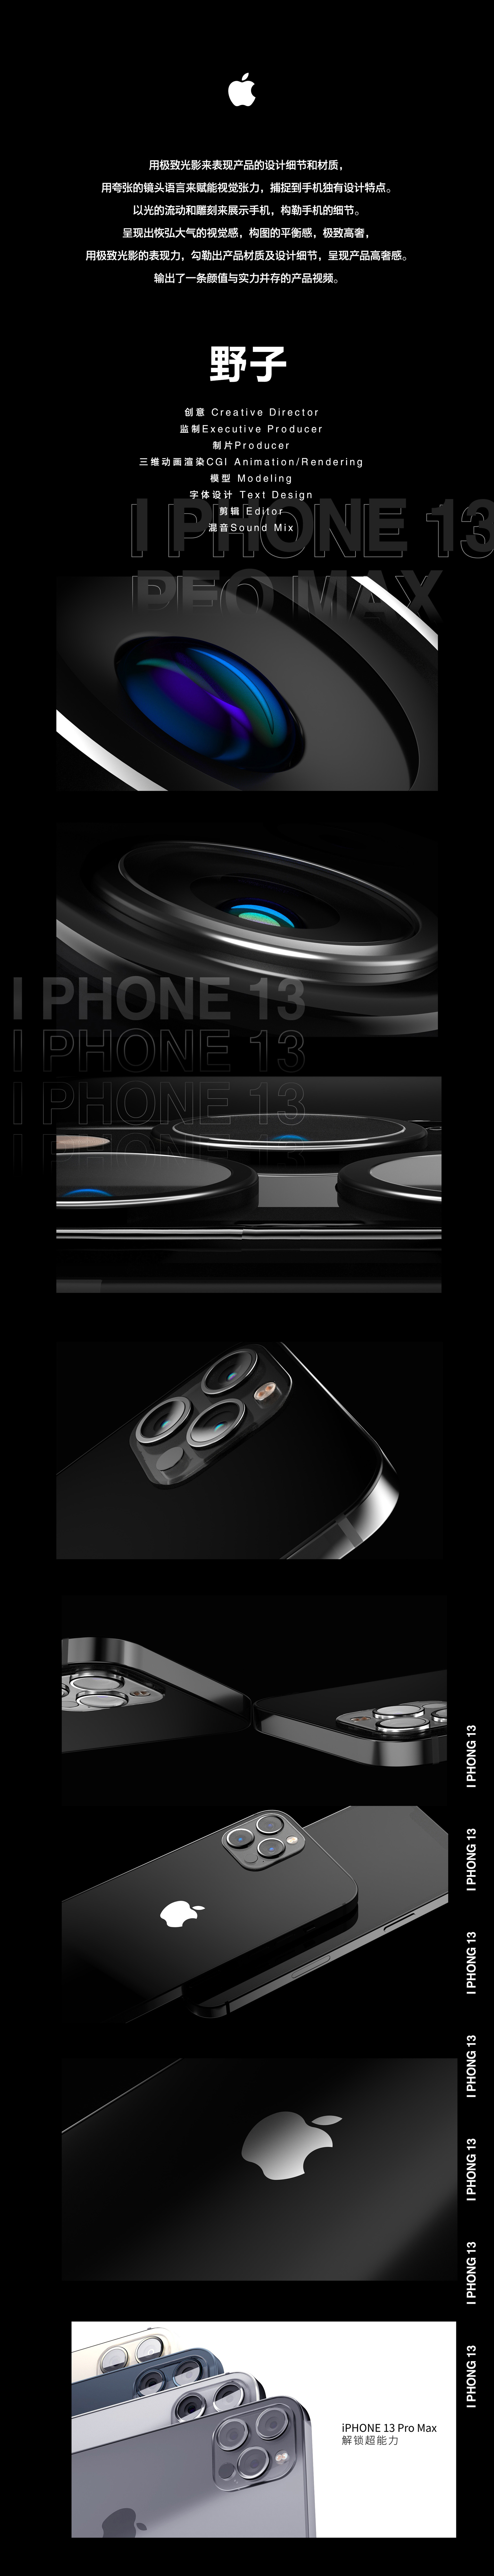 iPHONE13 Pro Max 解锁超能力 - 产品视频